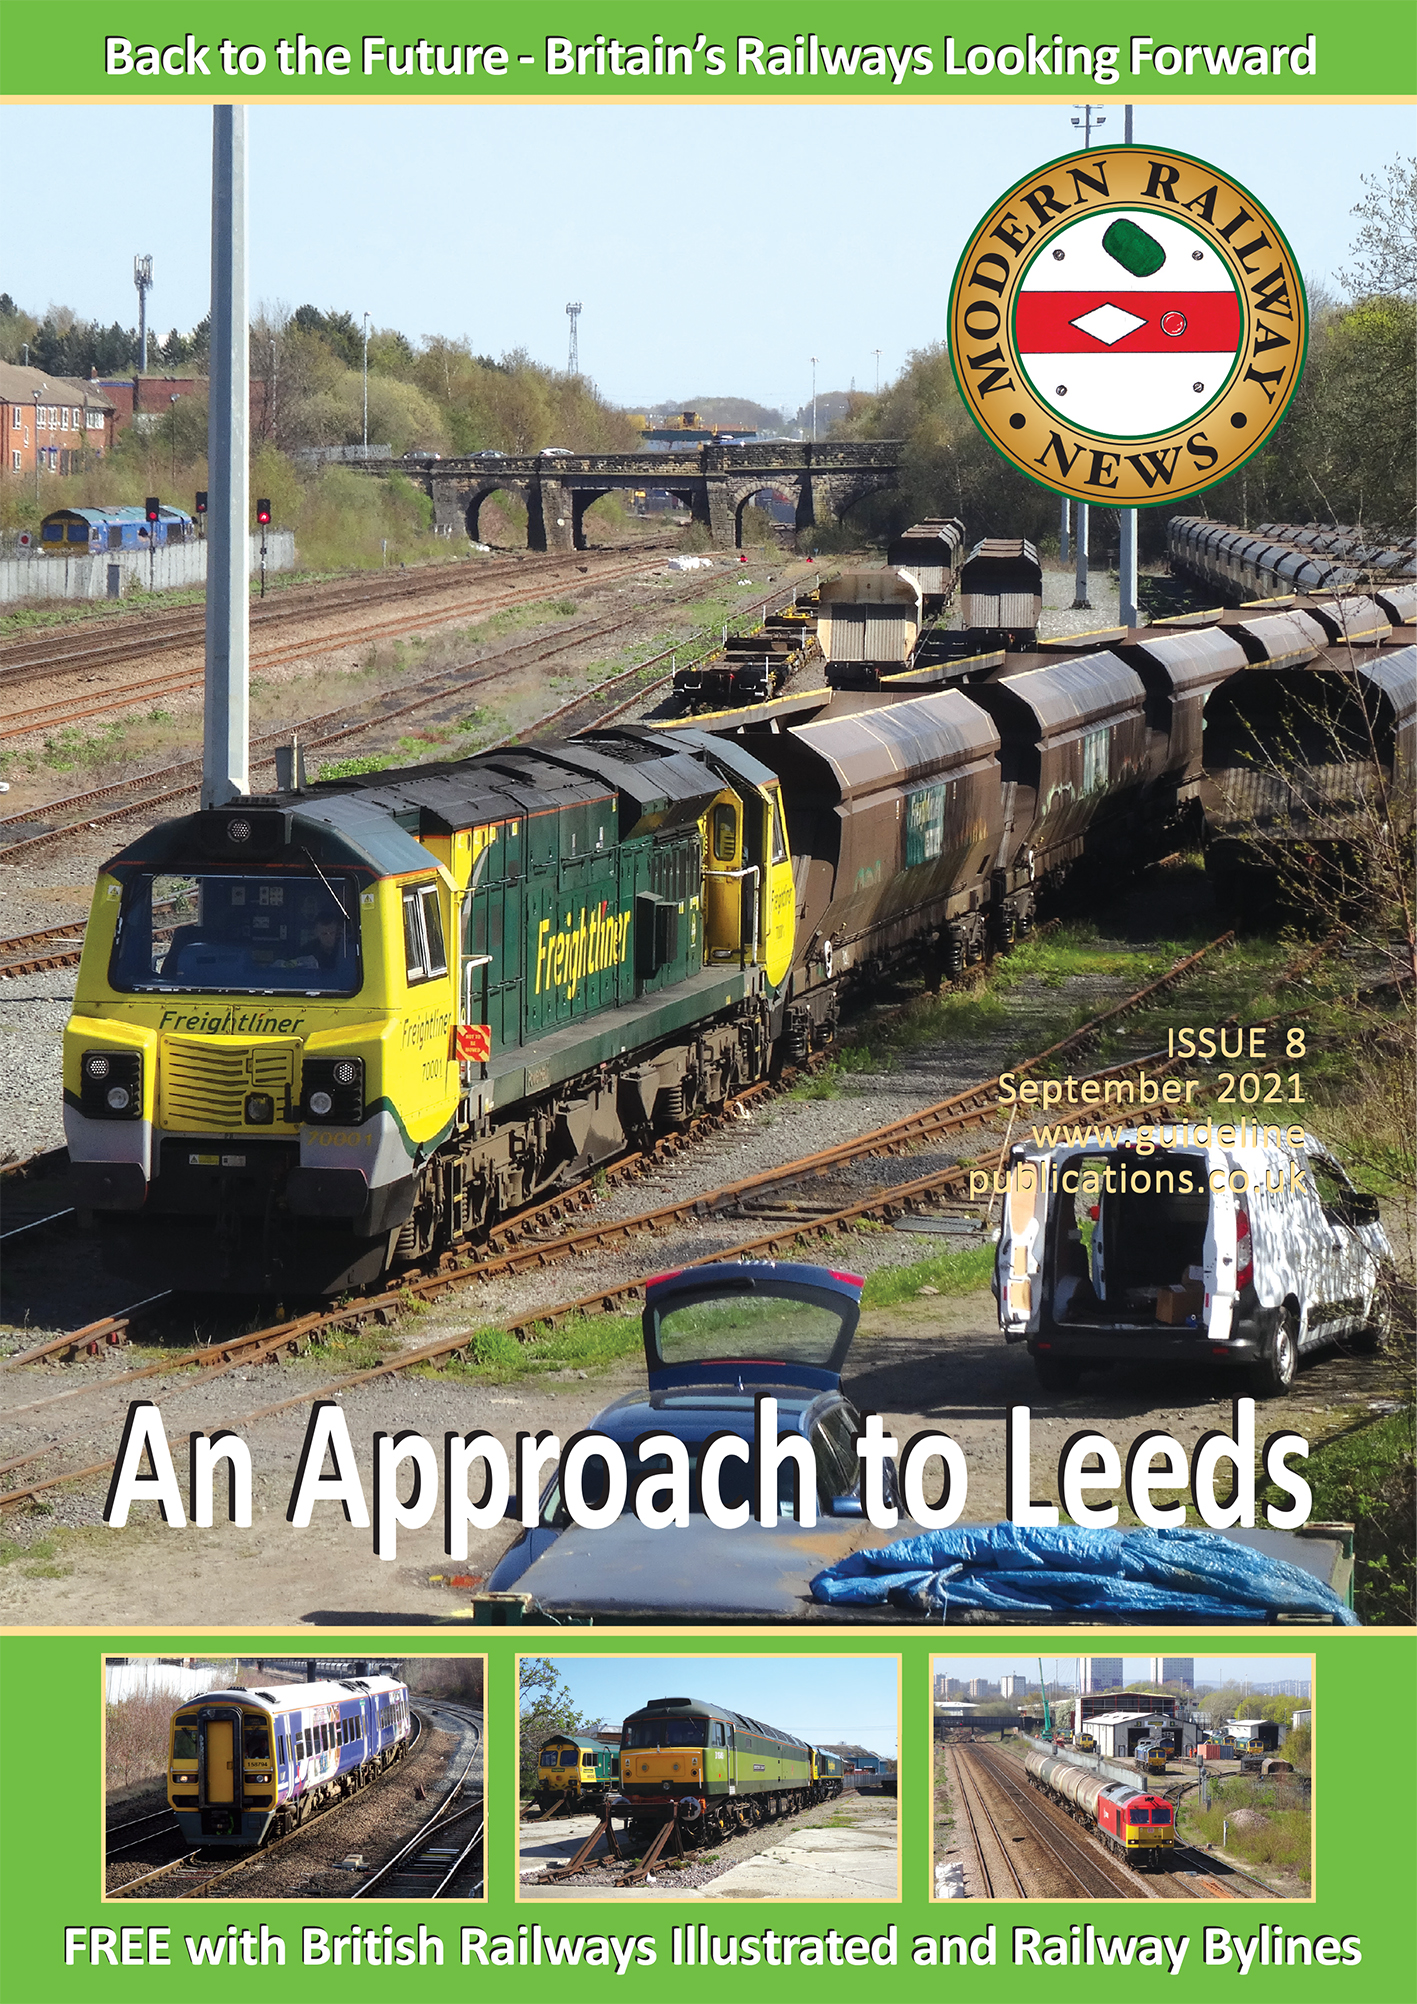 Guideline Publications Ltd Modern Railway News issue 8 - Free digital issue FREE DIGITAL ISSUE - Sept 2021 